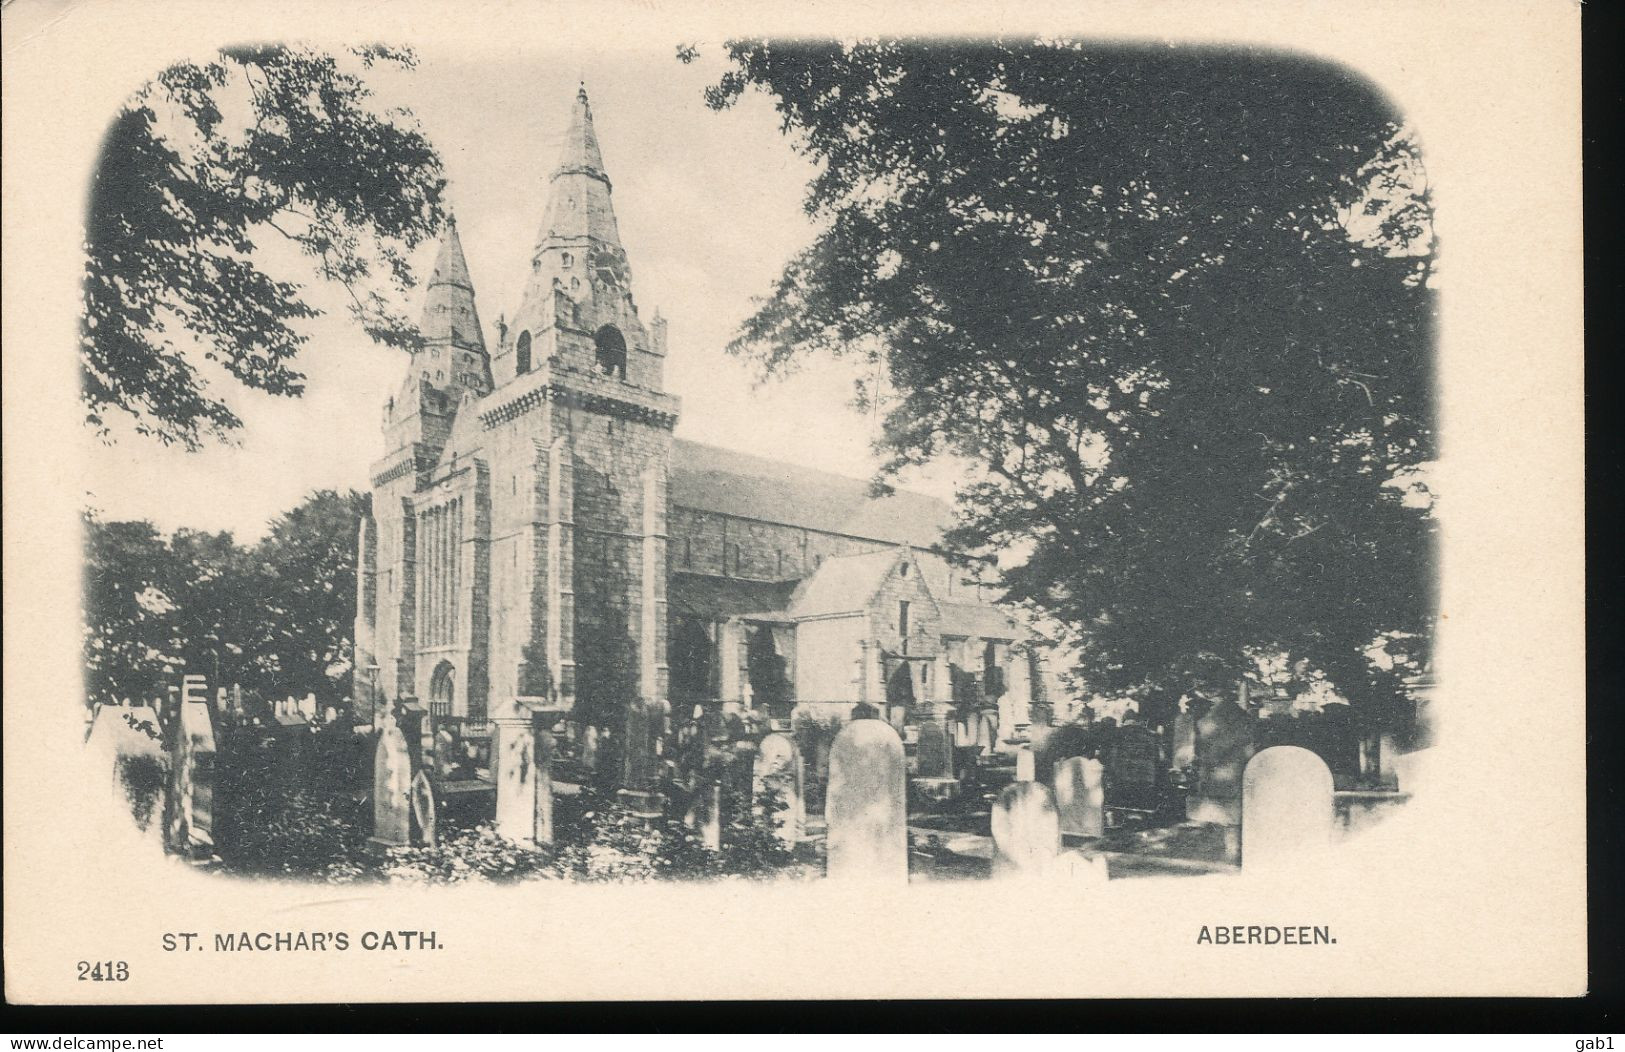 St. Machar's Cath -- Aberdeen - Aberdeenshire